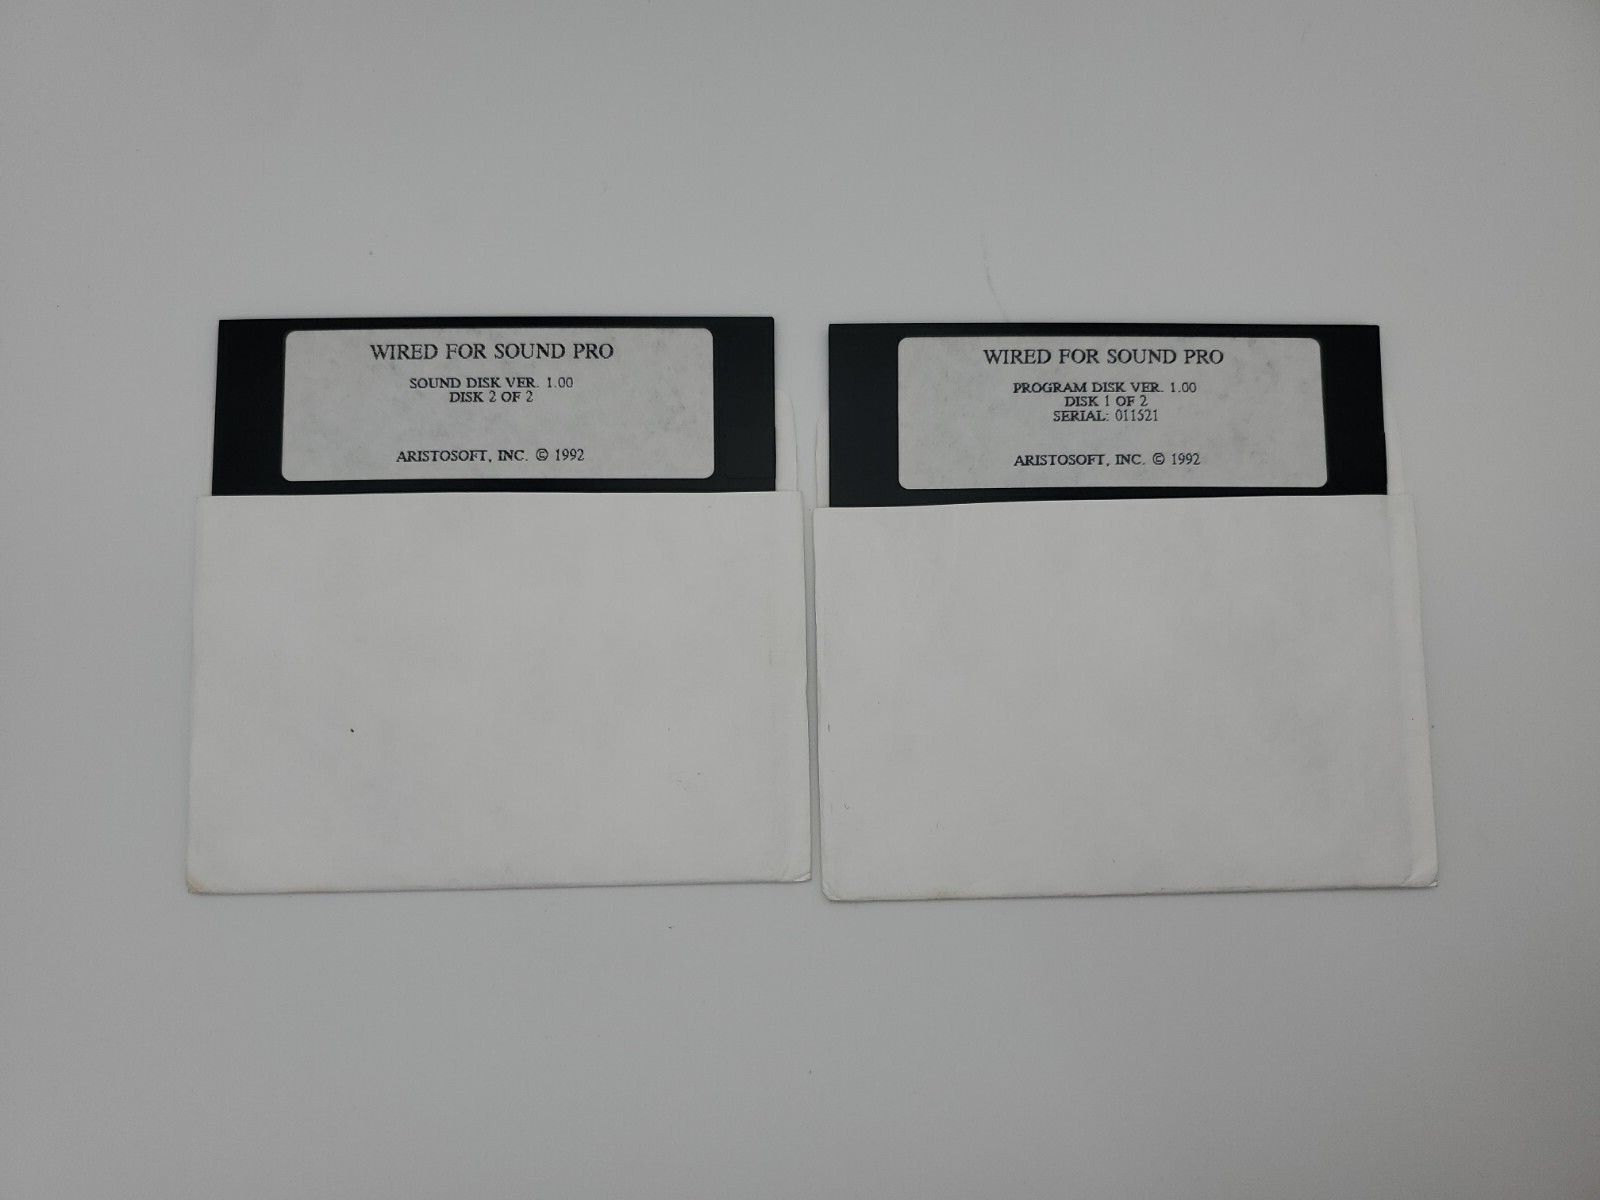 Vintage 1992 Aristosoft Wired For Sound Pro 2 5.25 Floppy disks.